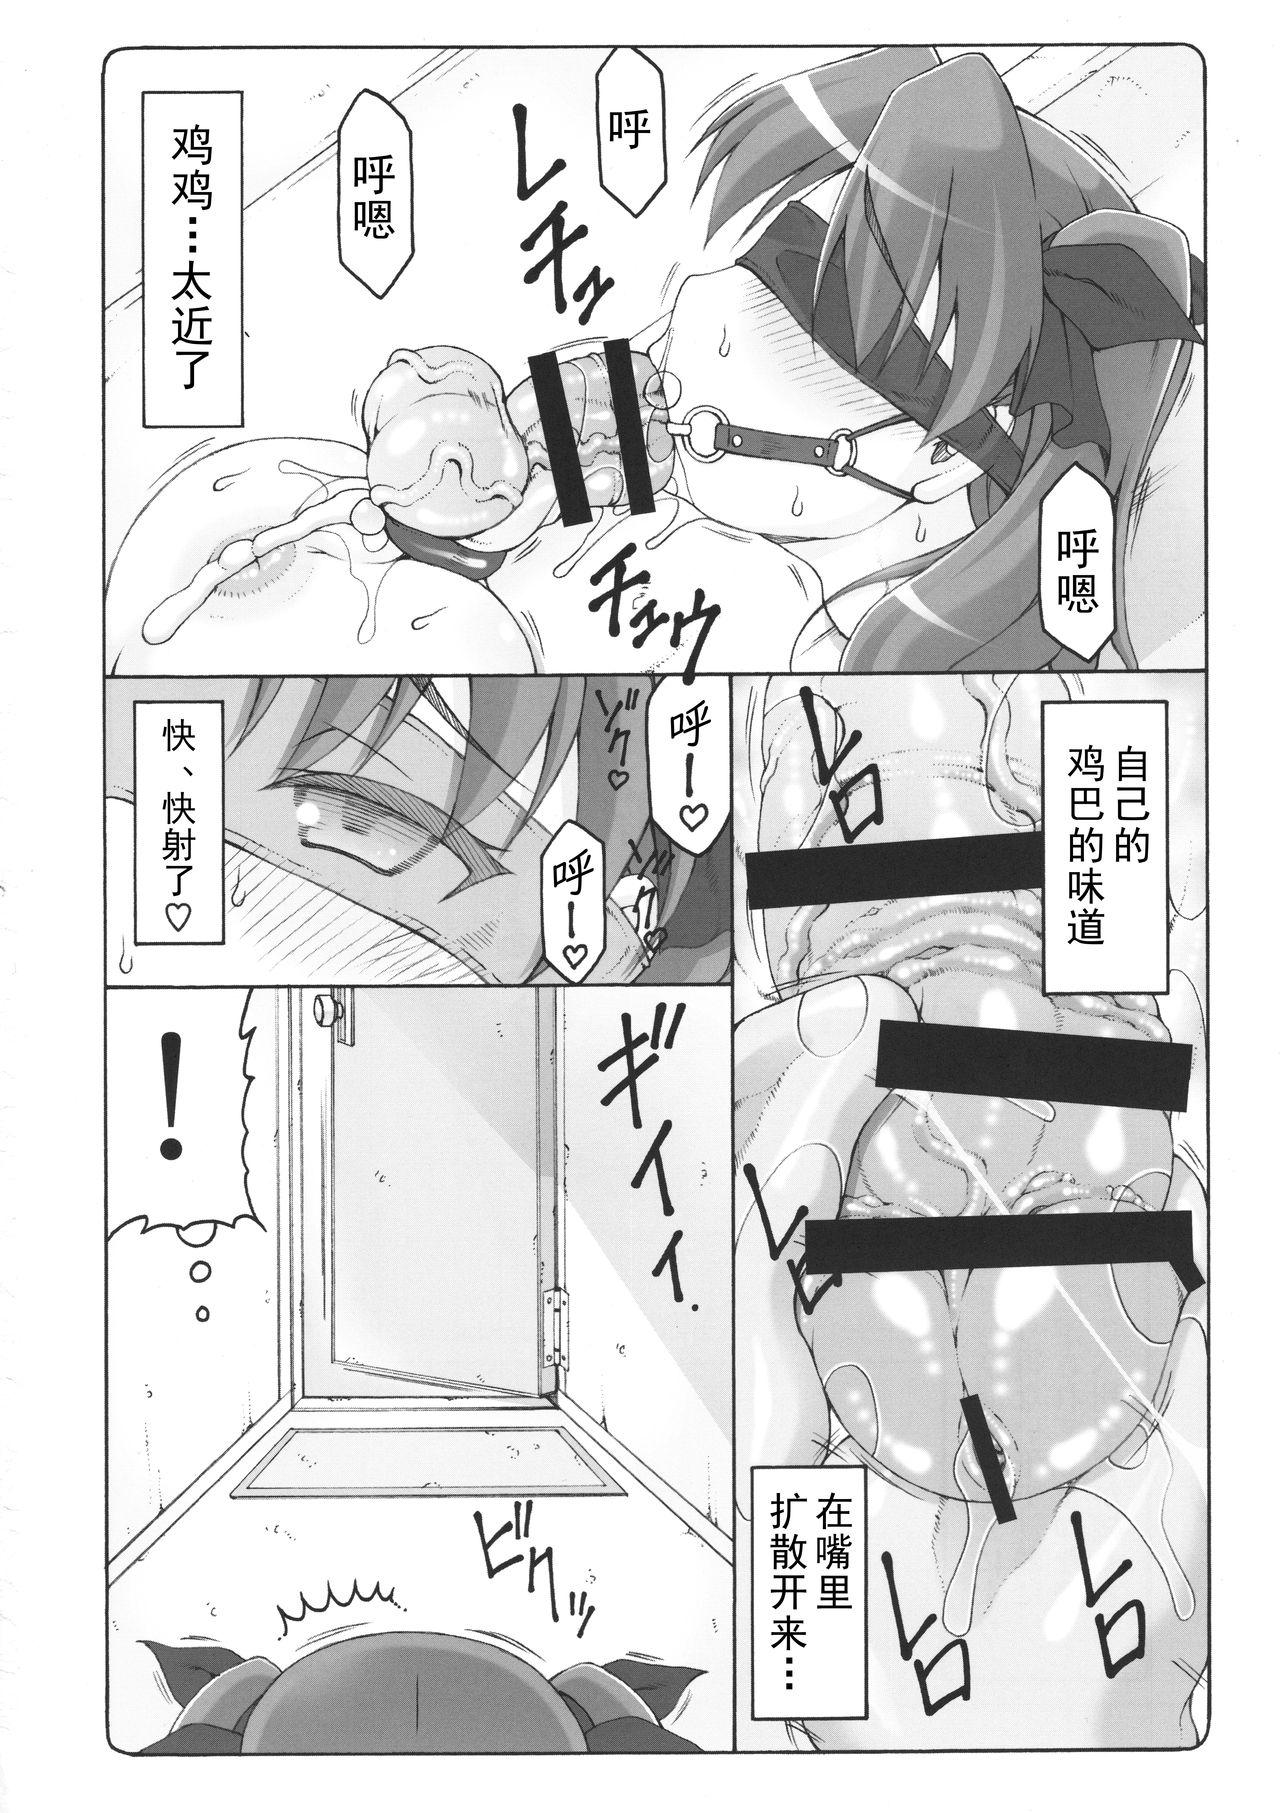 Public Kotori 16 - Fate stay night Chick - Page 6